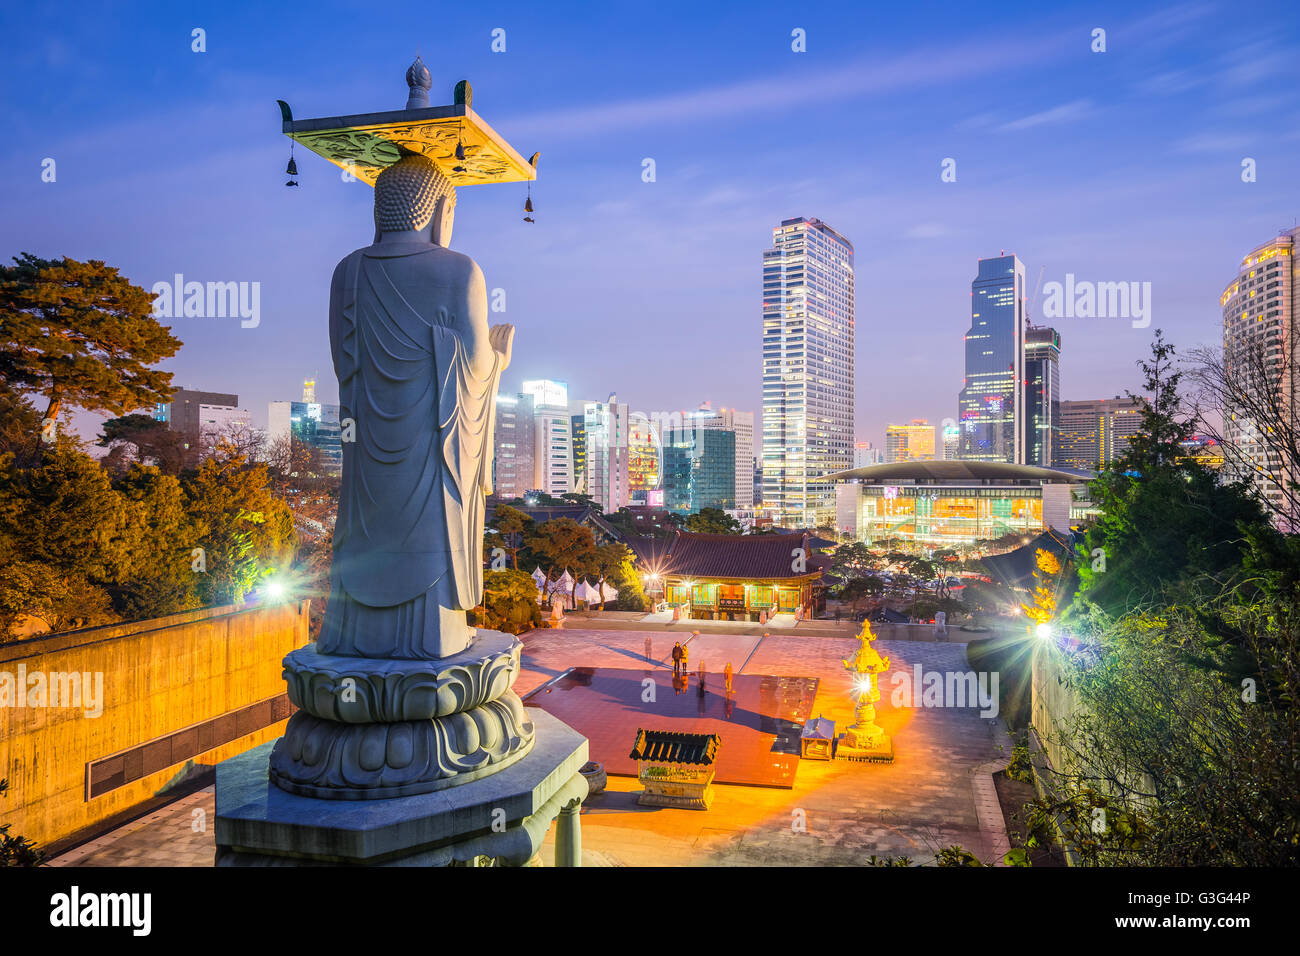 The Big Buddha at Bongeunsa in Seoul, South Korea. Stock Photo